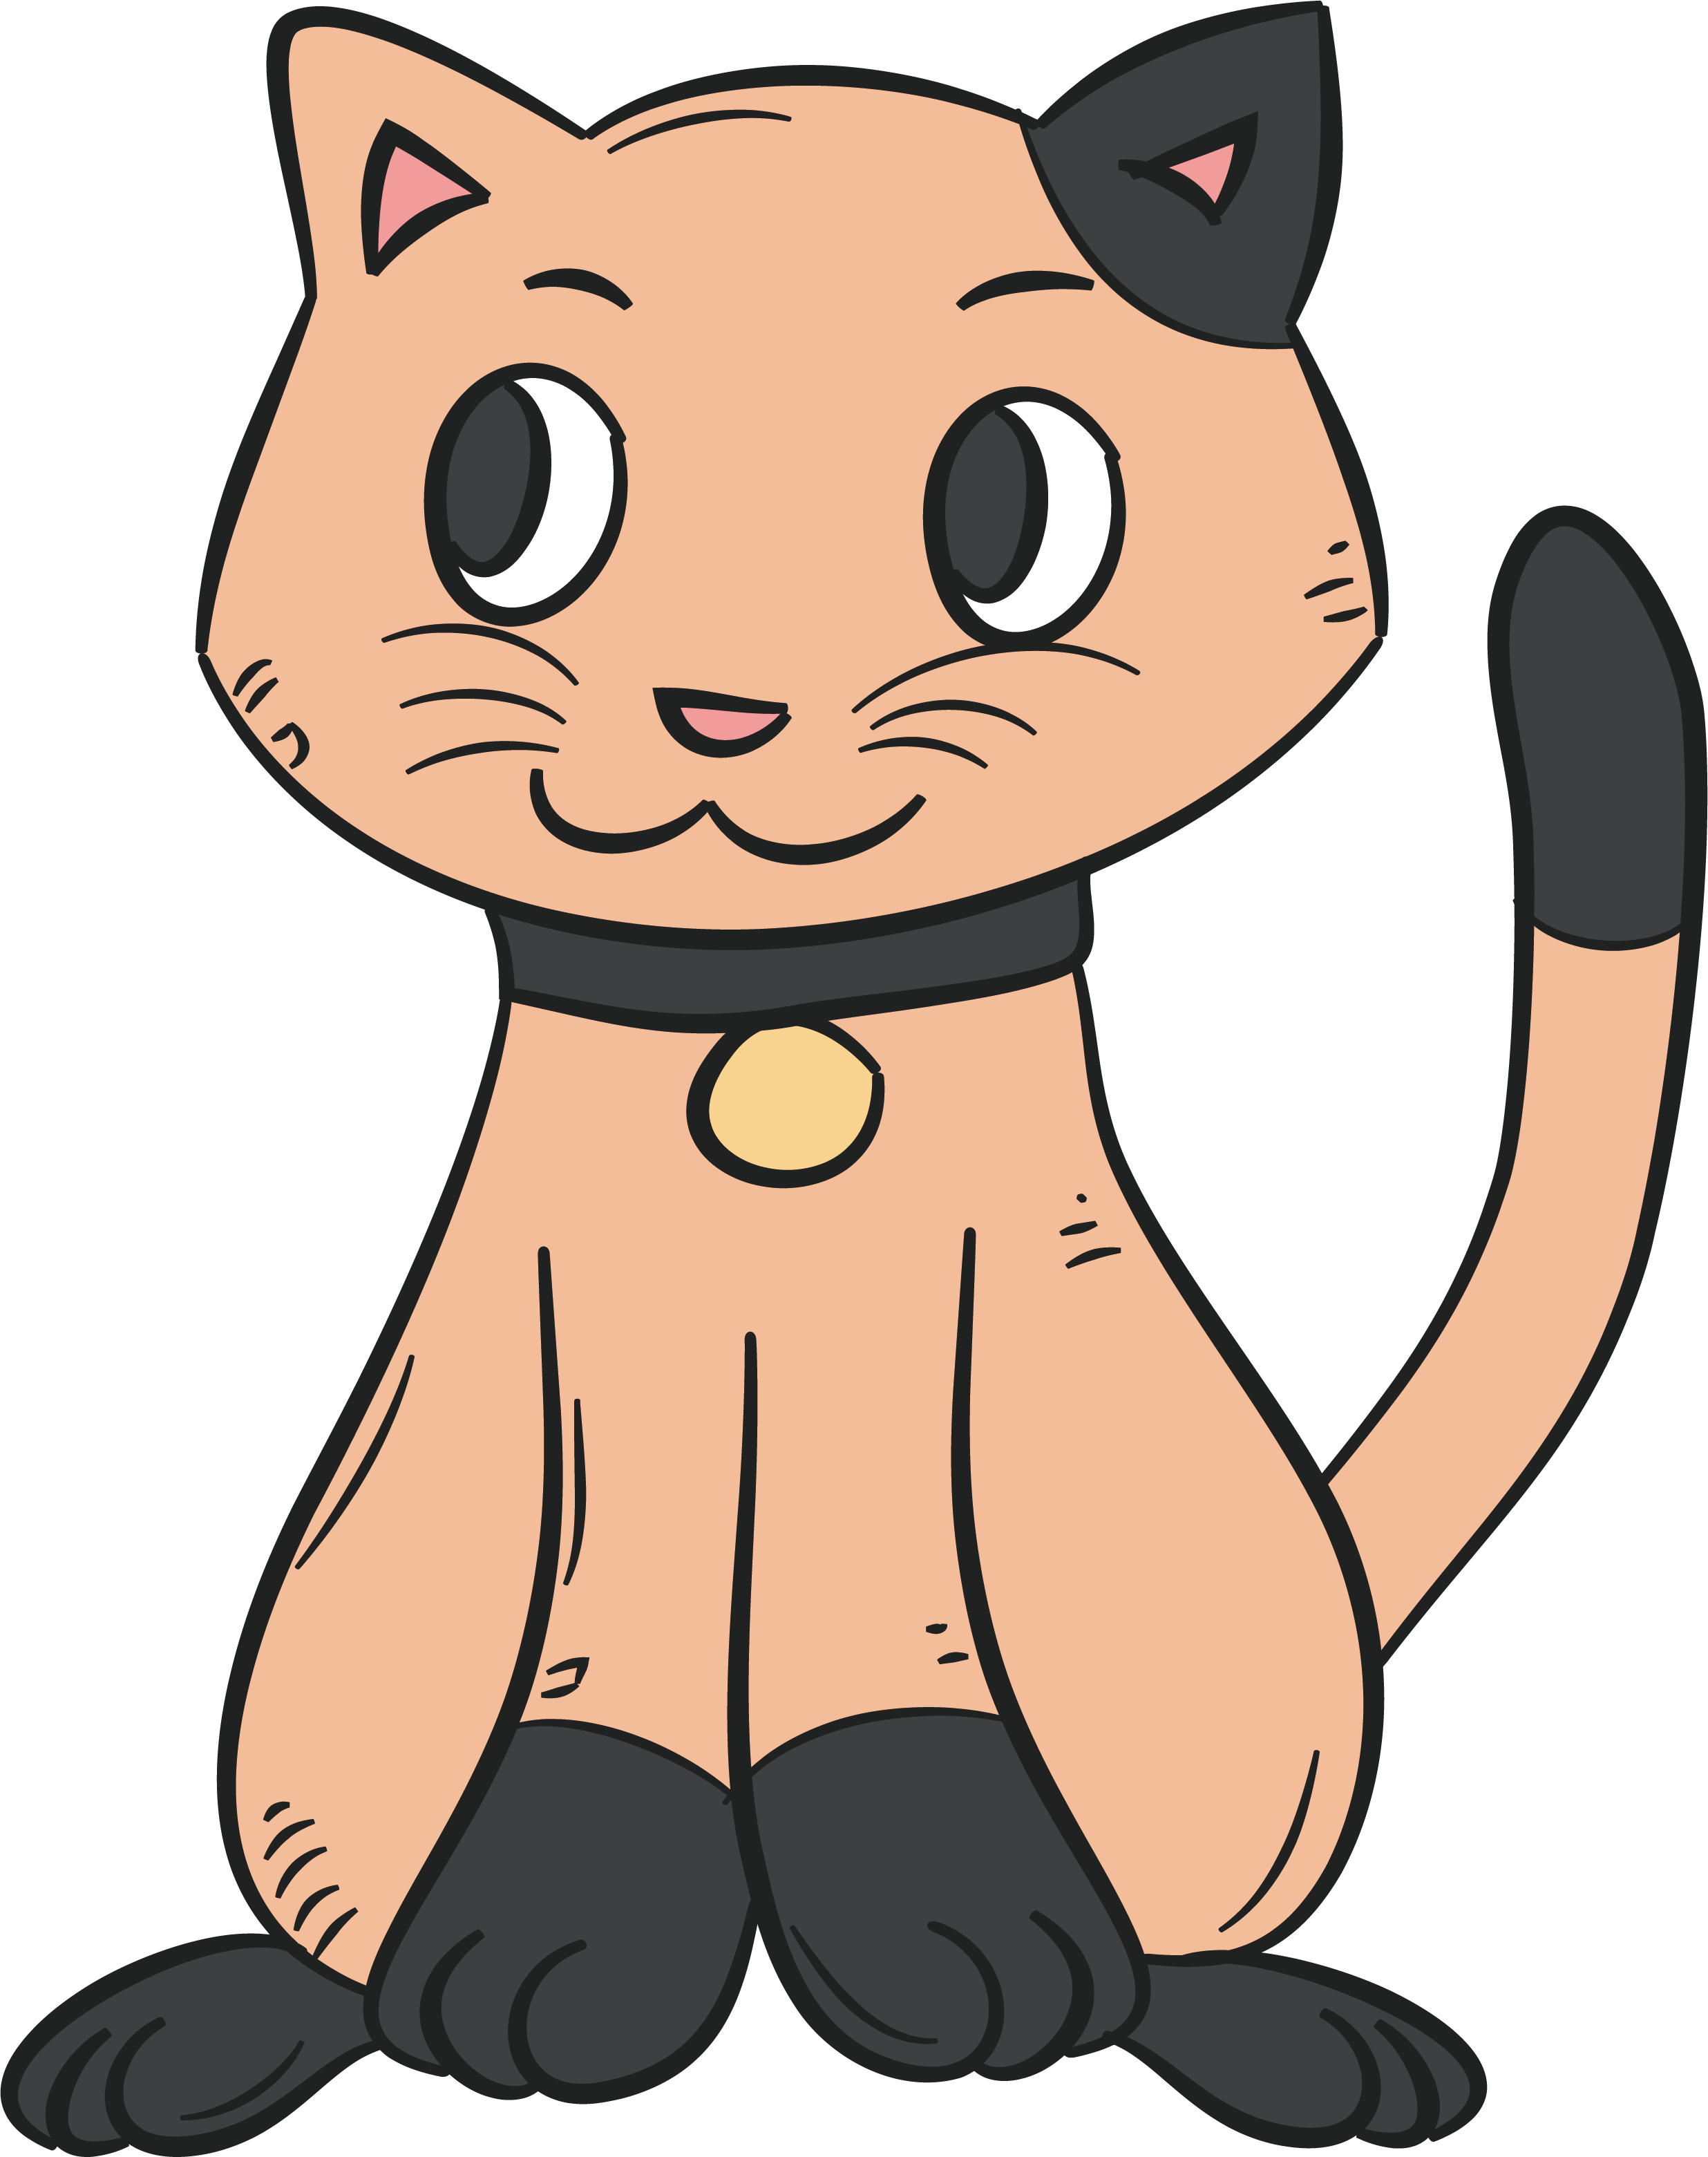 Cat Cartoon PNG Pic